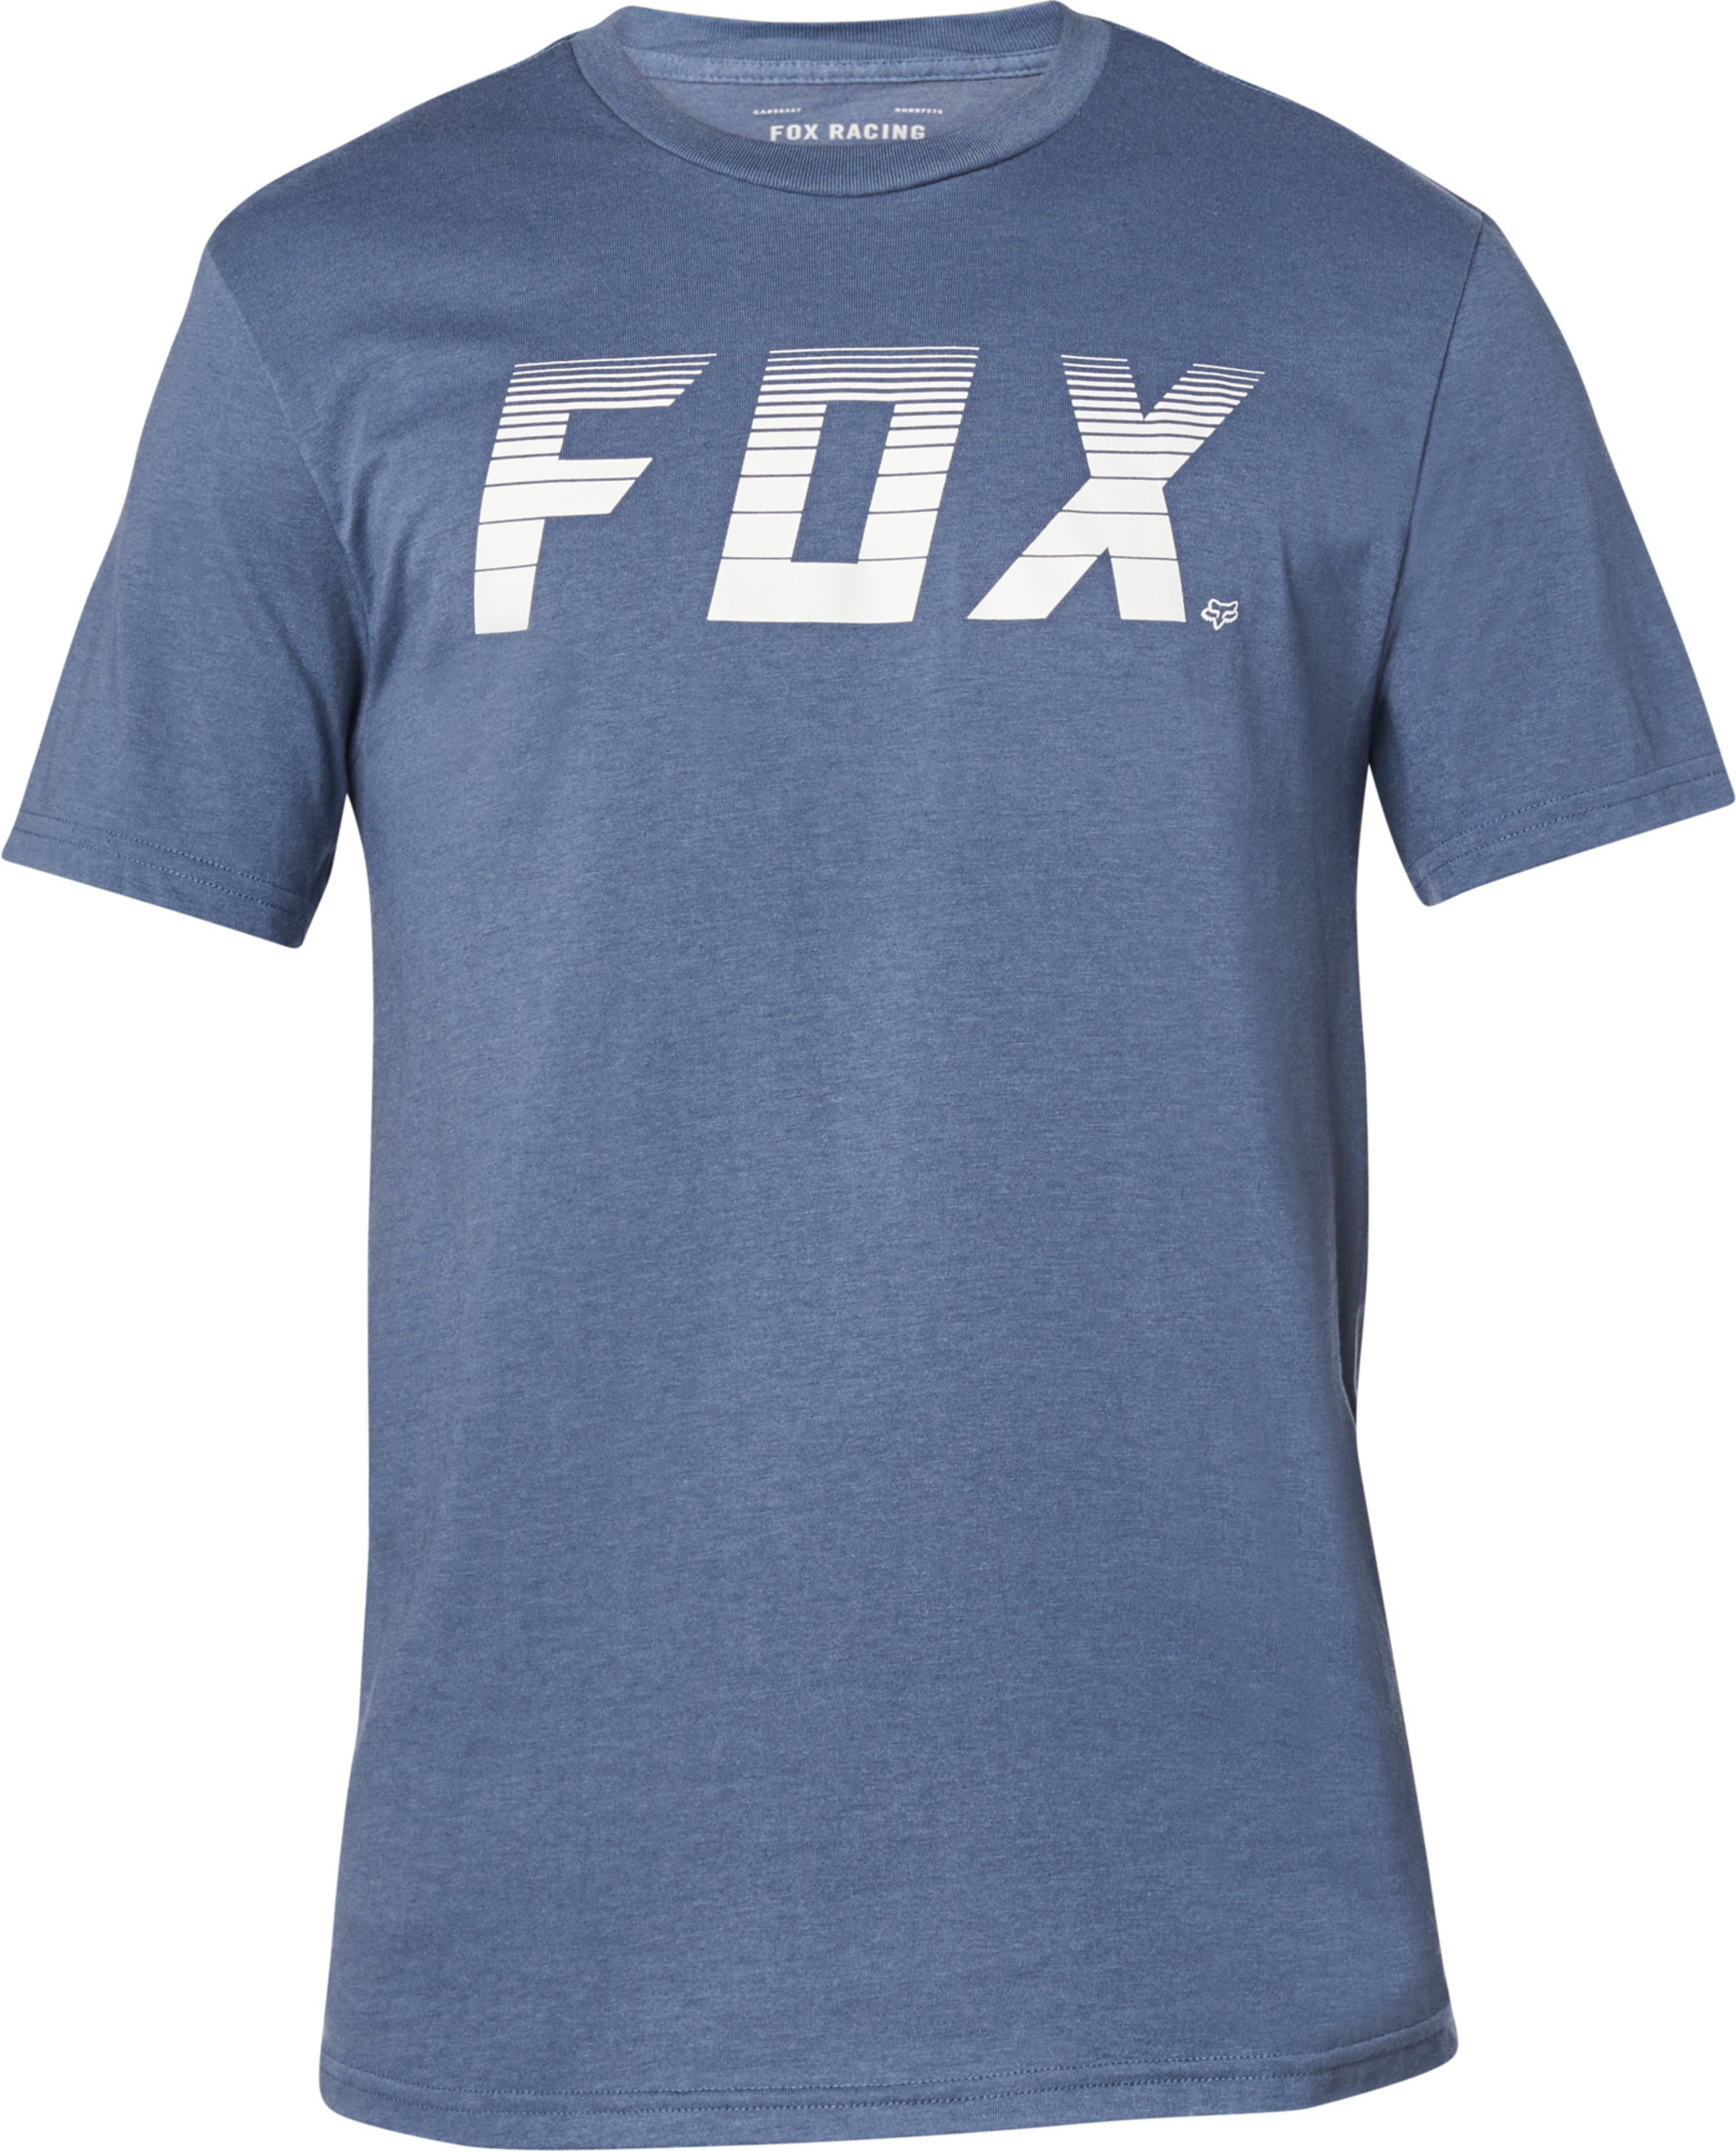 fox racing t-shirt shirts for men catalyst